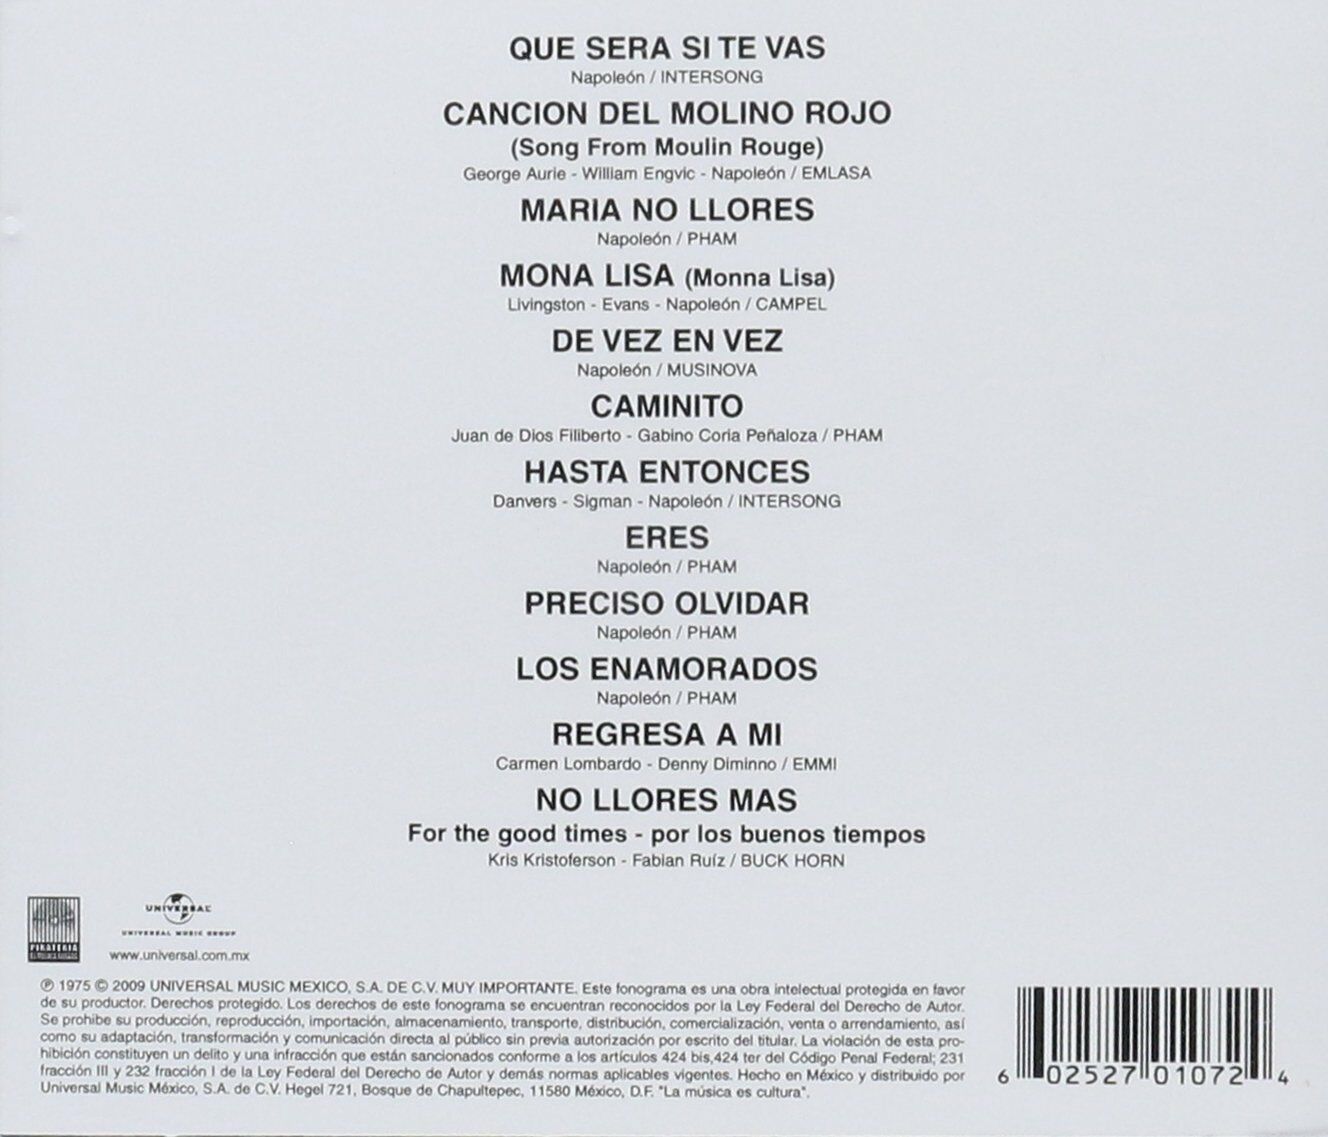 CD Napoleon - Súper Estéreo 16